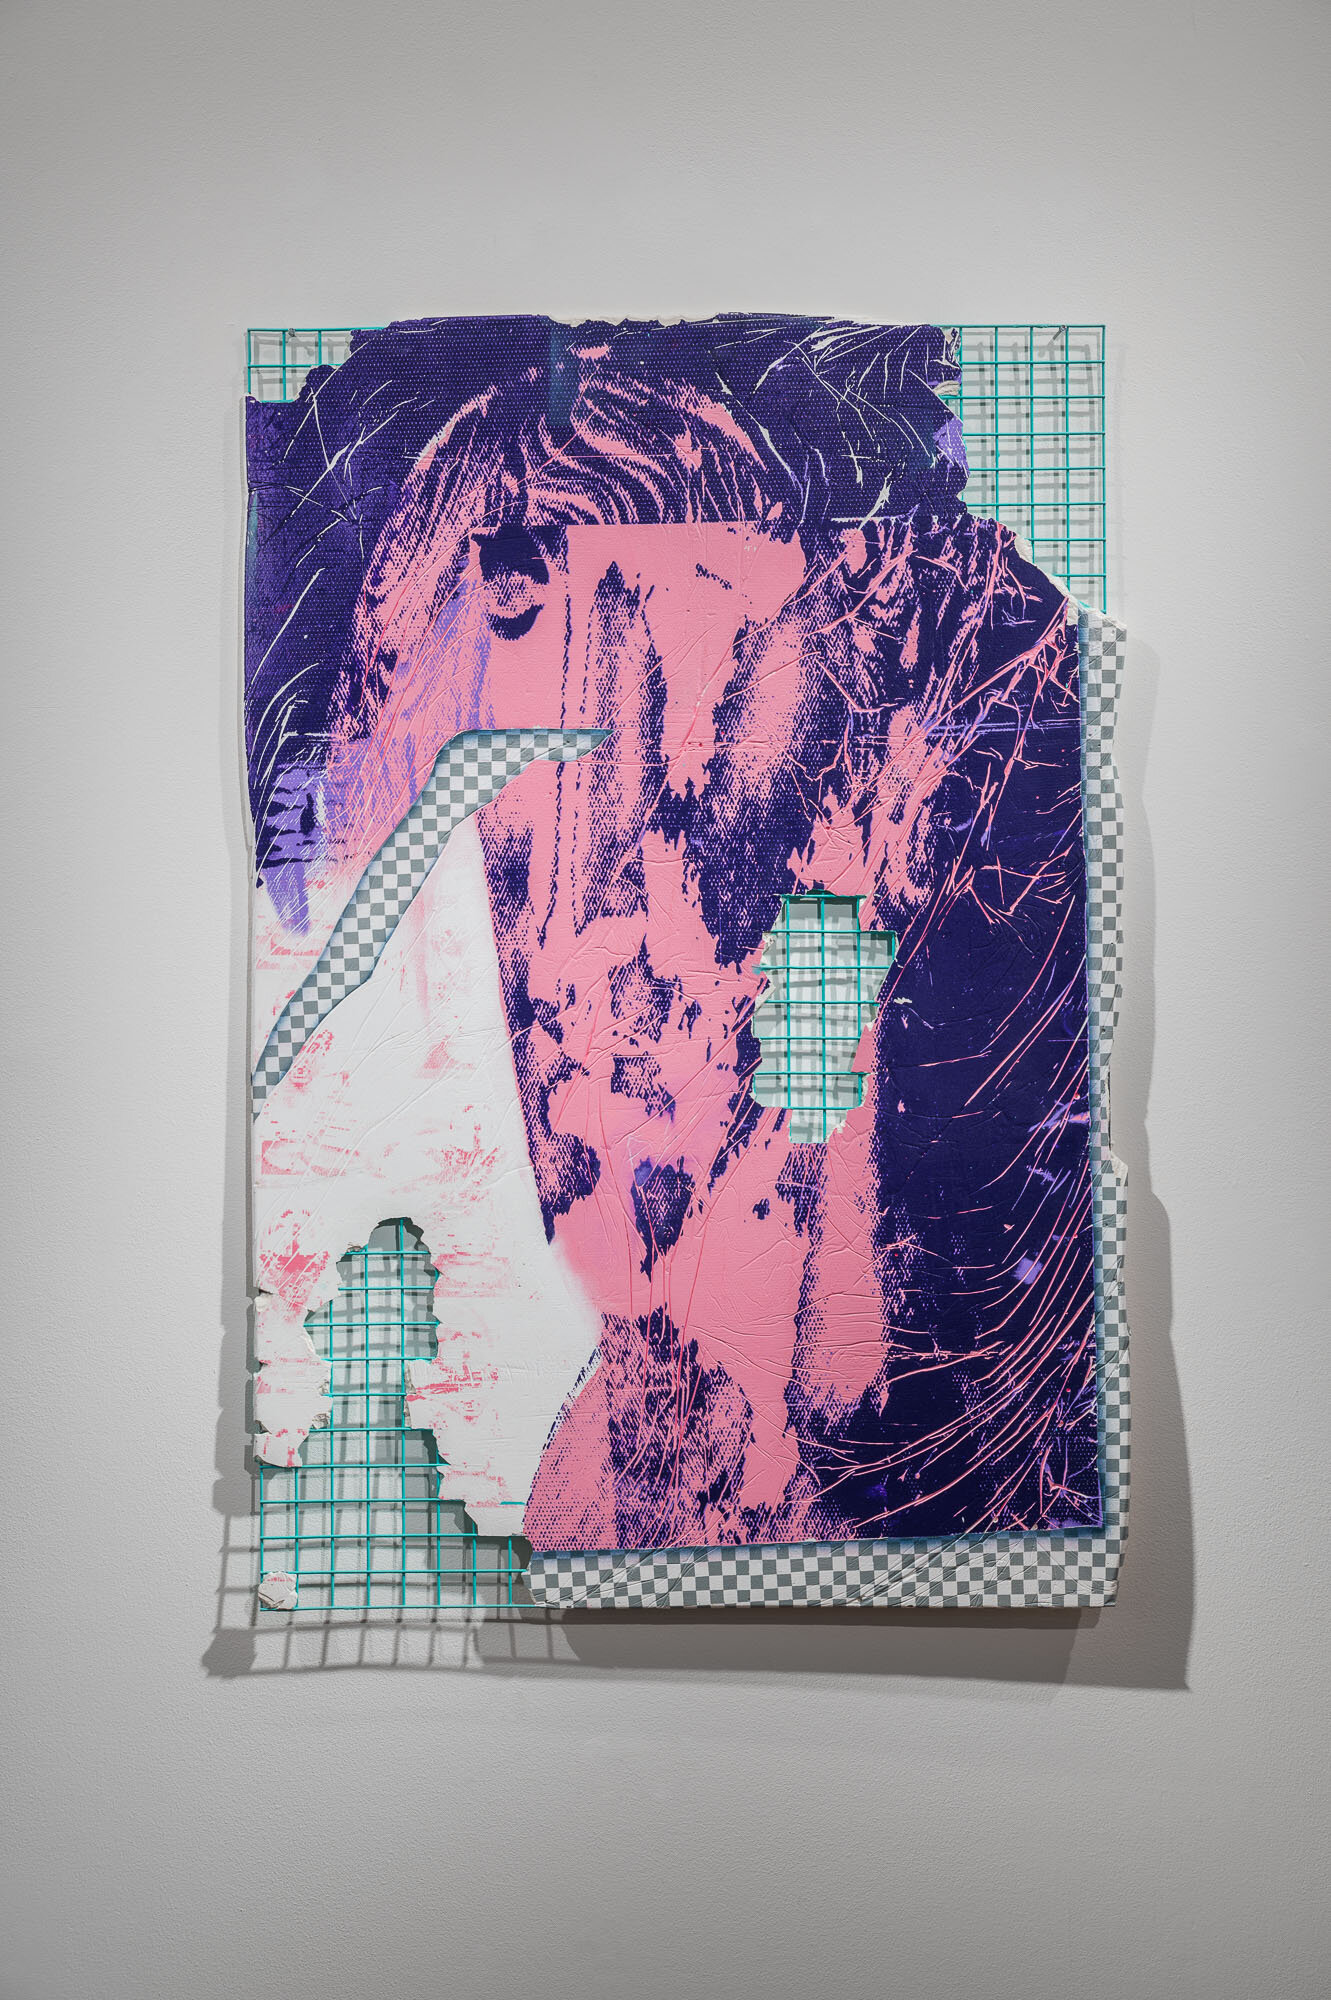   Busted Head    Plaster, mesh, acrylic, aerosol, screenprint   90cm x 60cm 